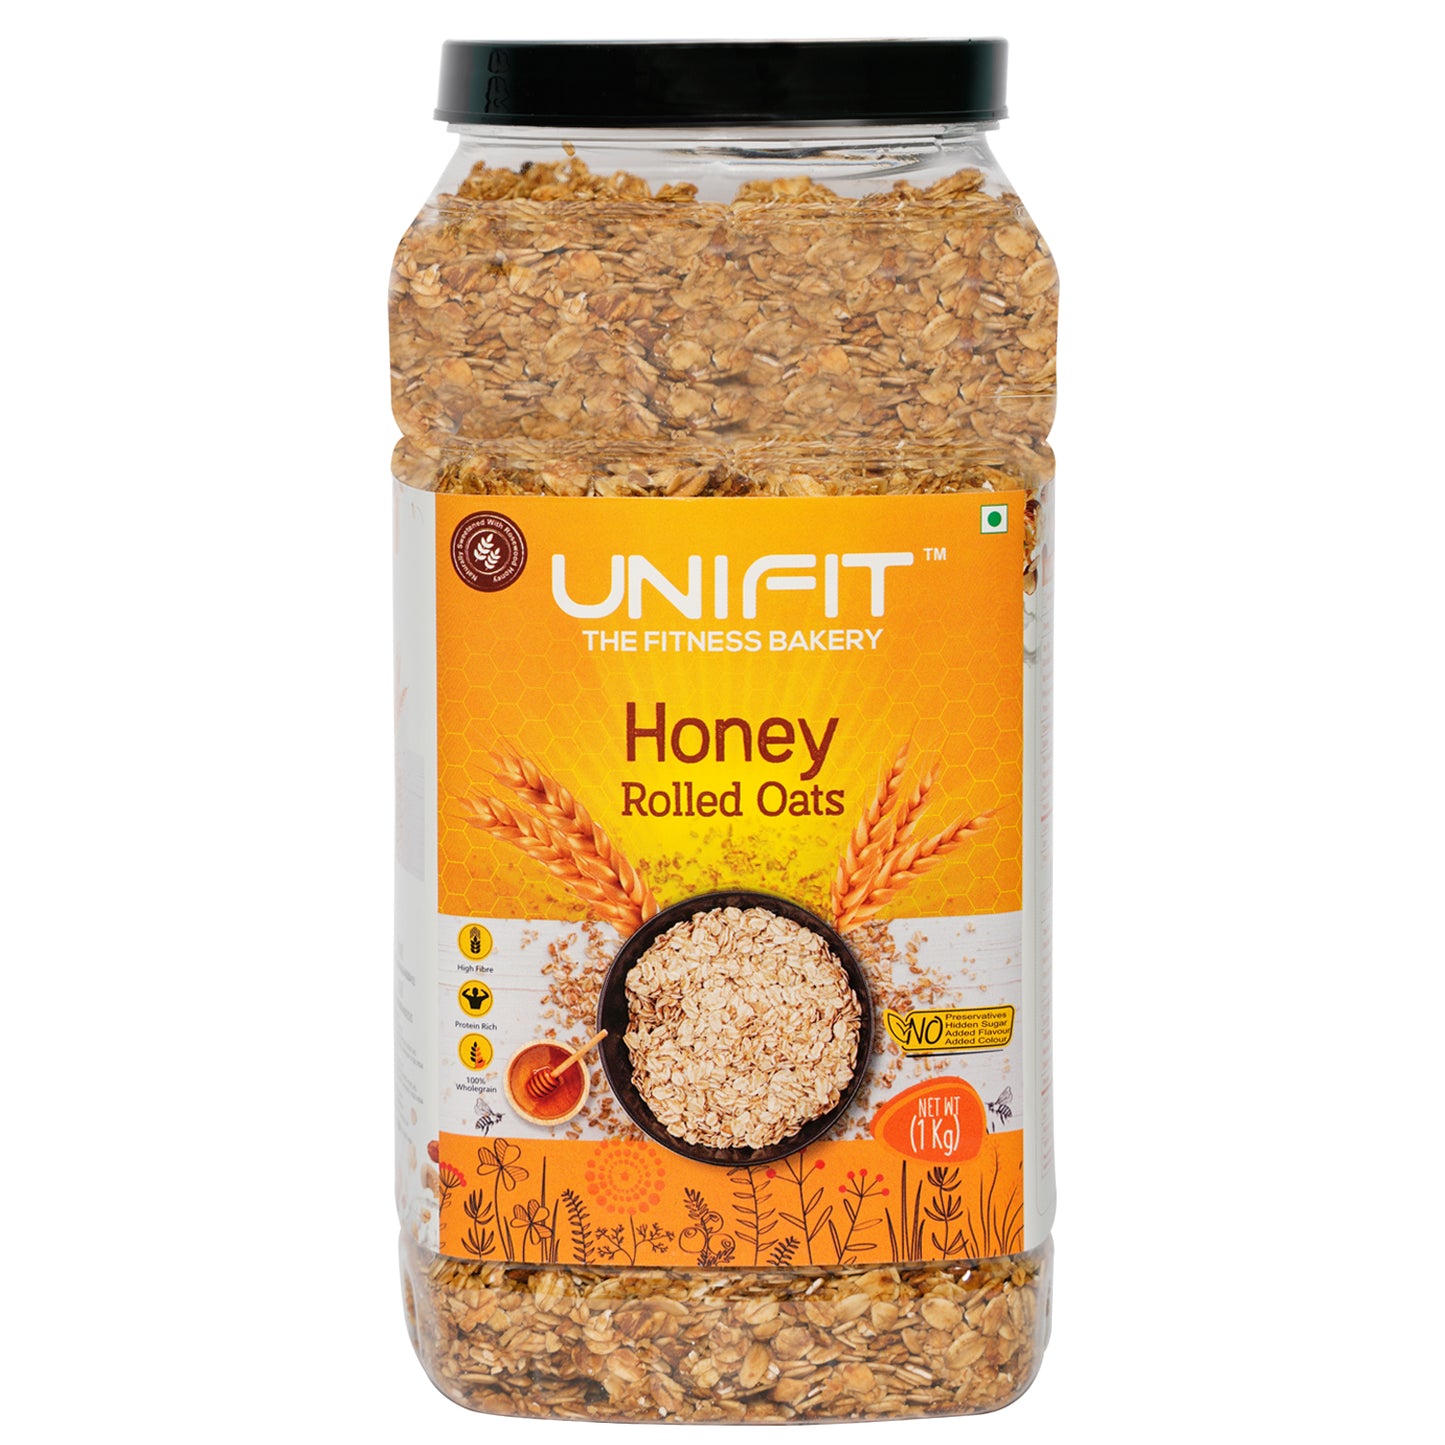 UNIFIT Honey Rolled Oats